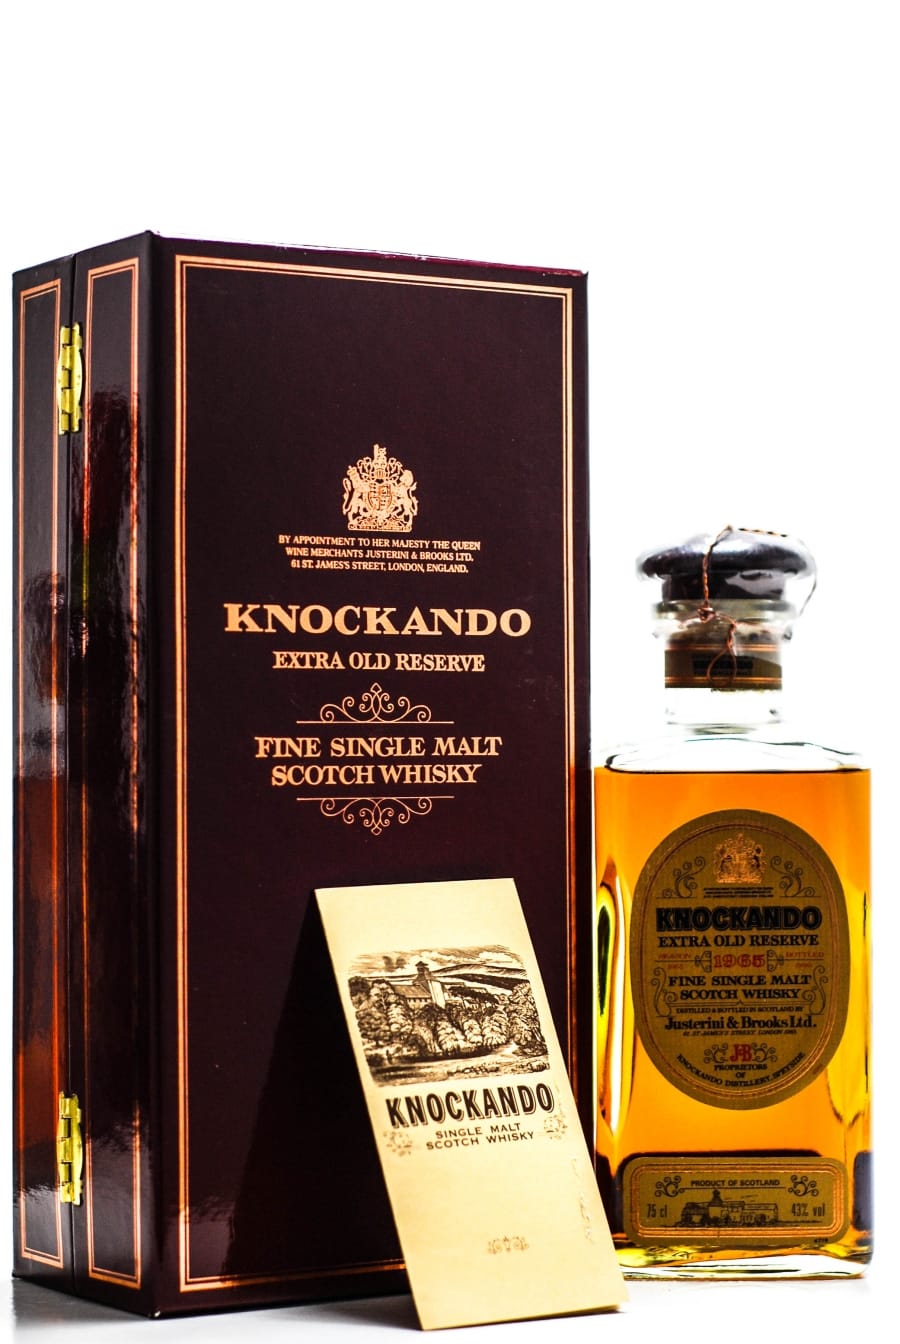 Knockando - Knockando 1965 Extra Old Reserve Square Decanter Bottled for Justerini & Brooks Ltd. 43% 1965 In Original Container